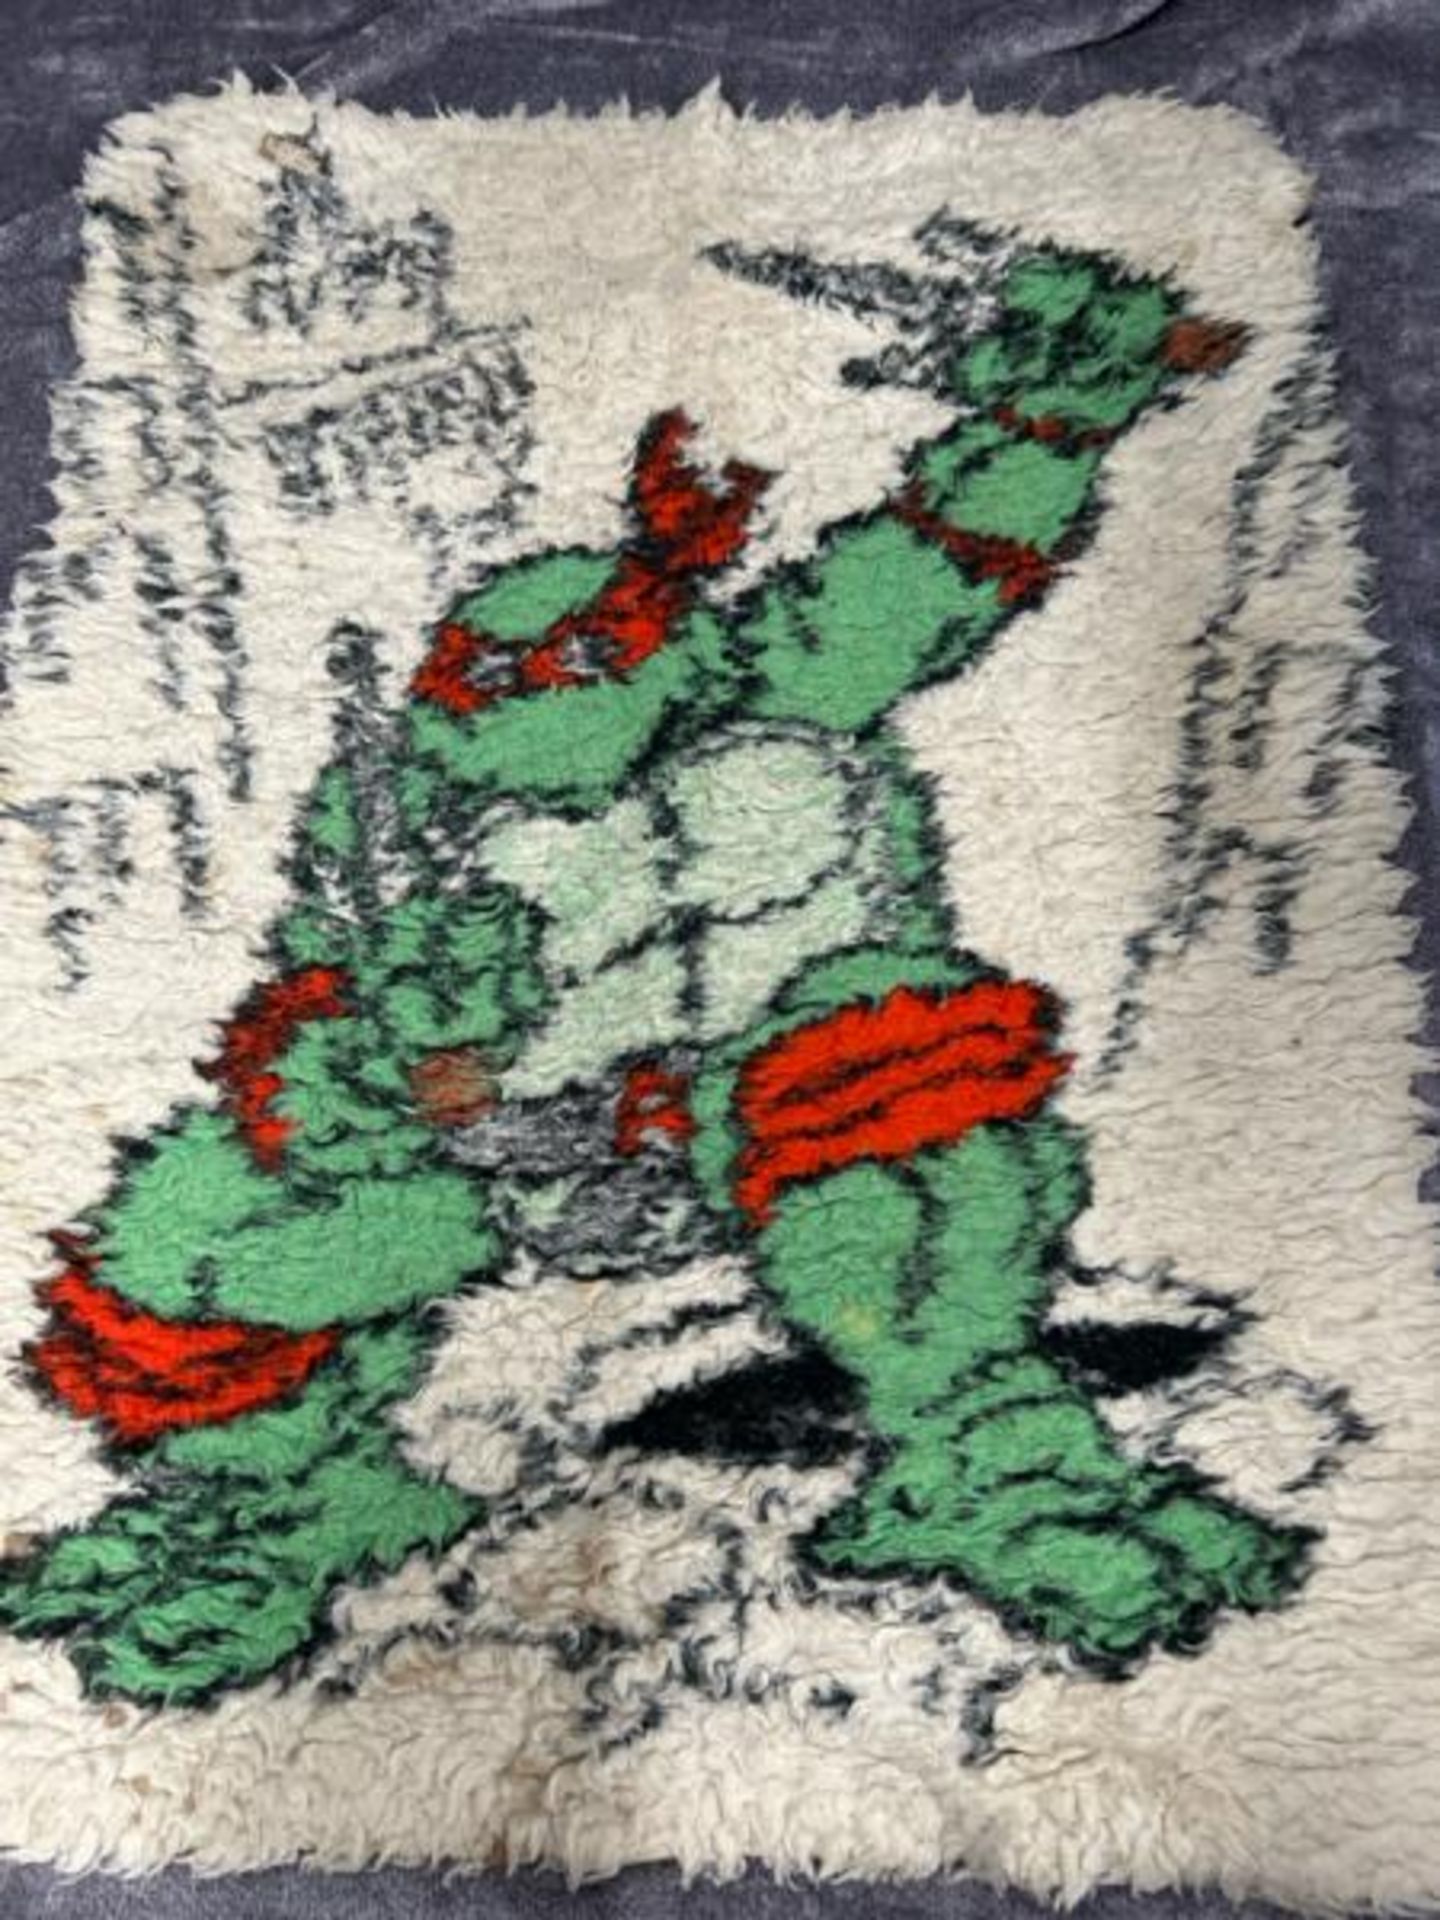 Teenage Mutant Hero Turtles soft toys, rug, rucksacks, bags and hot water bottles / AN41 - Image 8 of 8